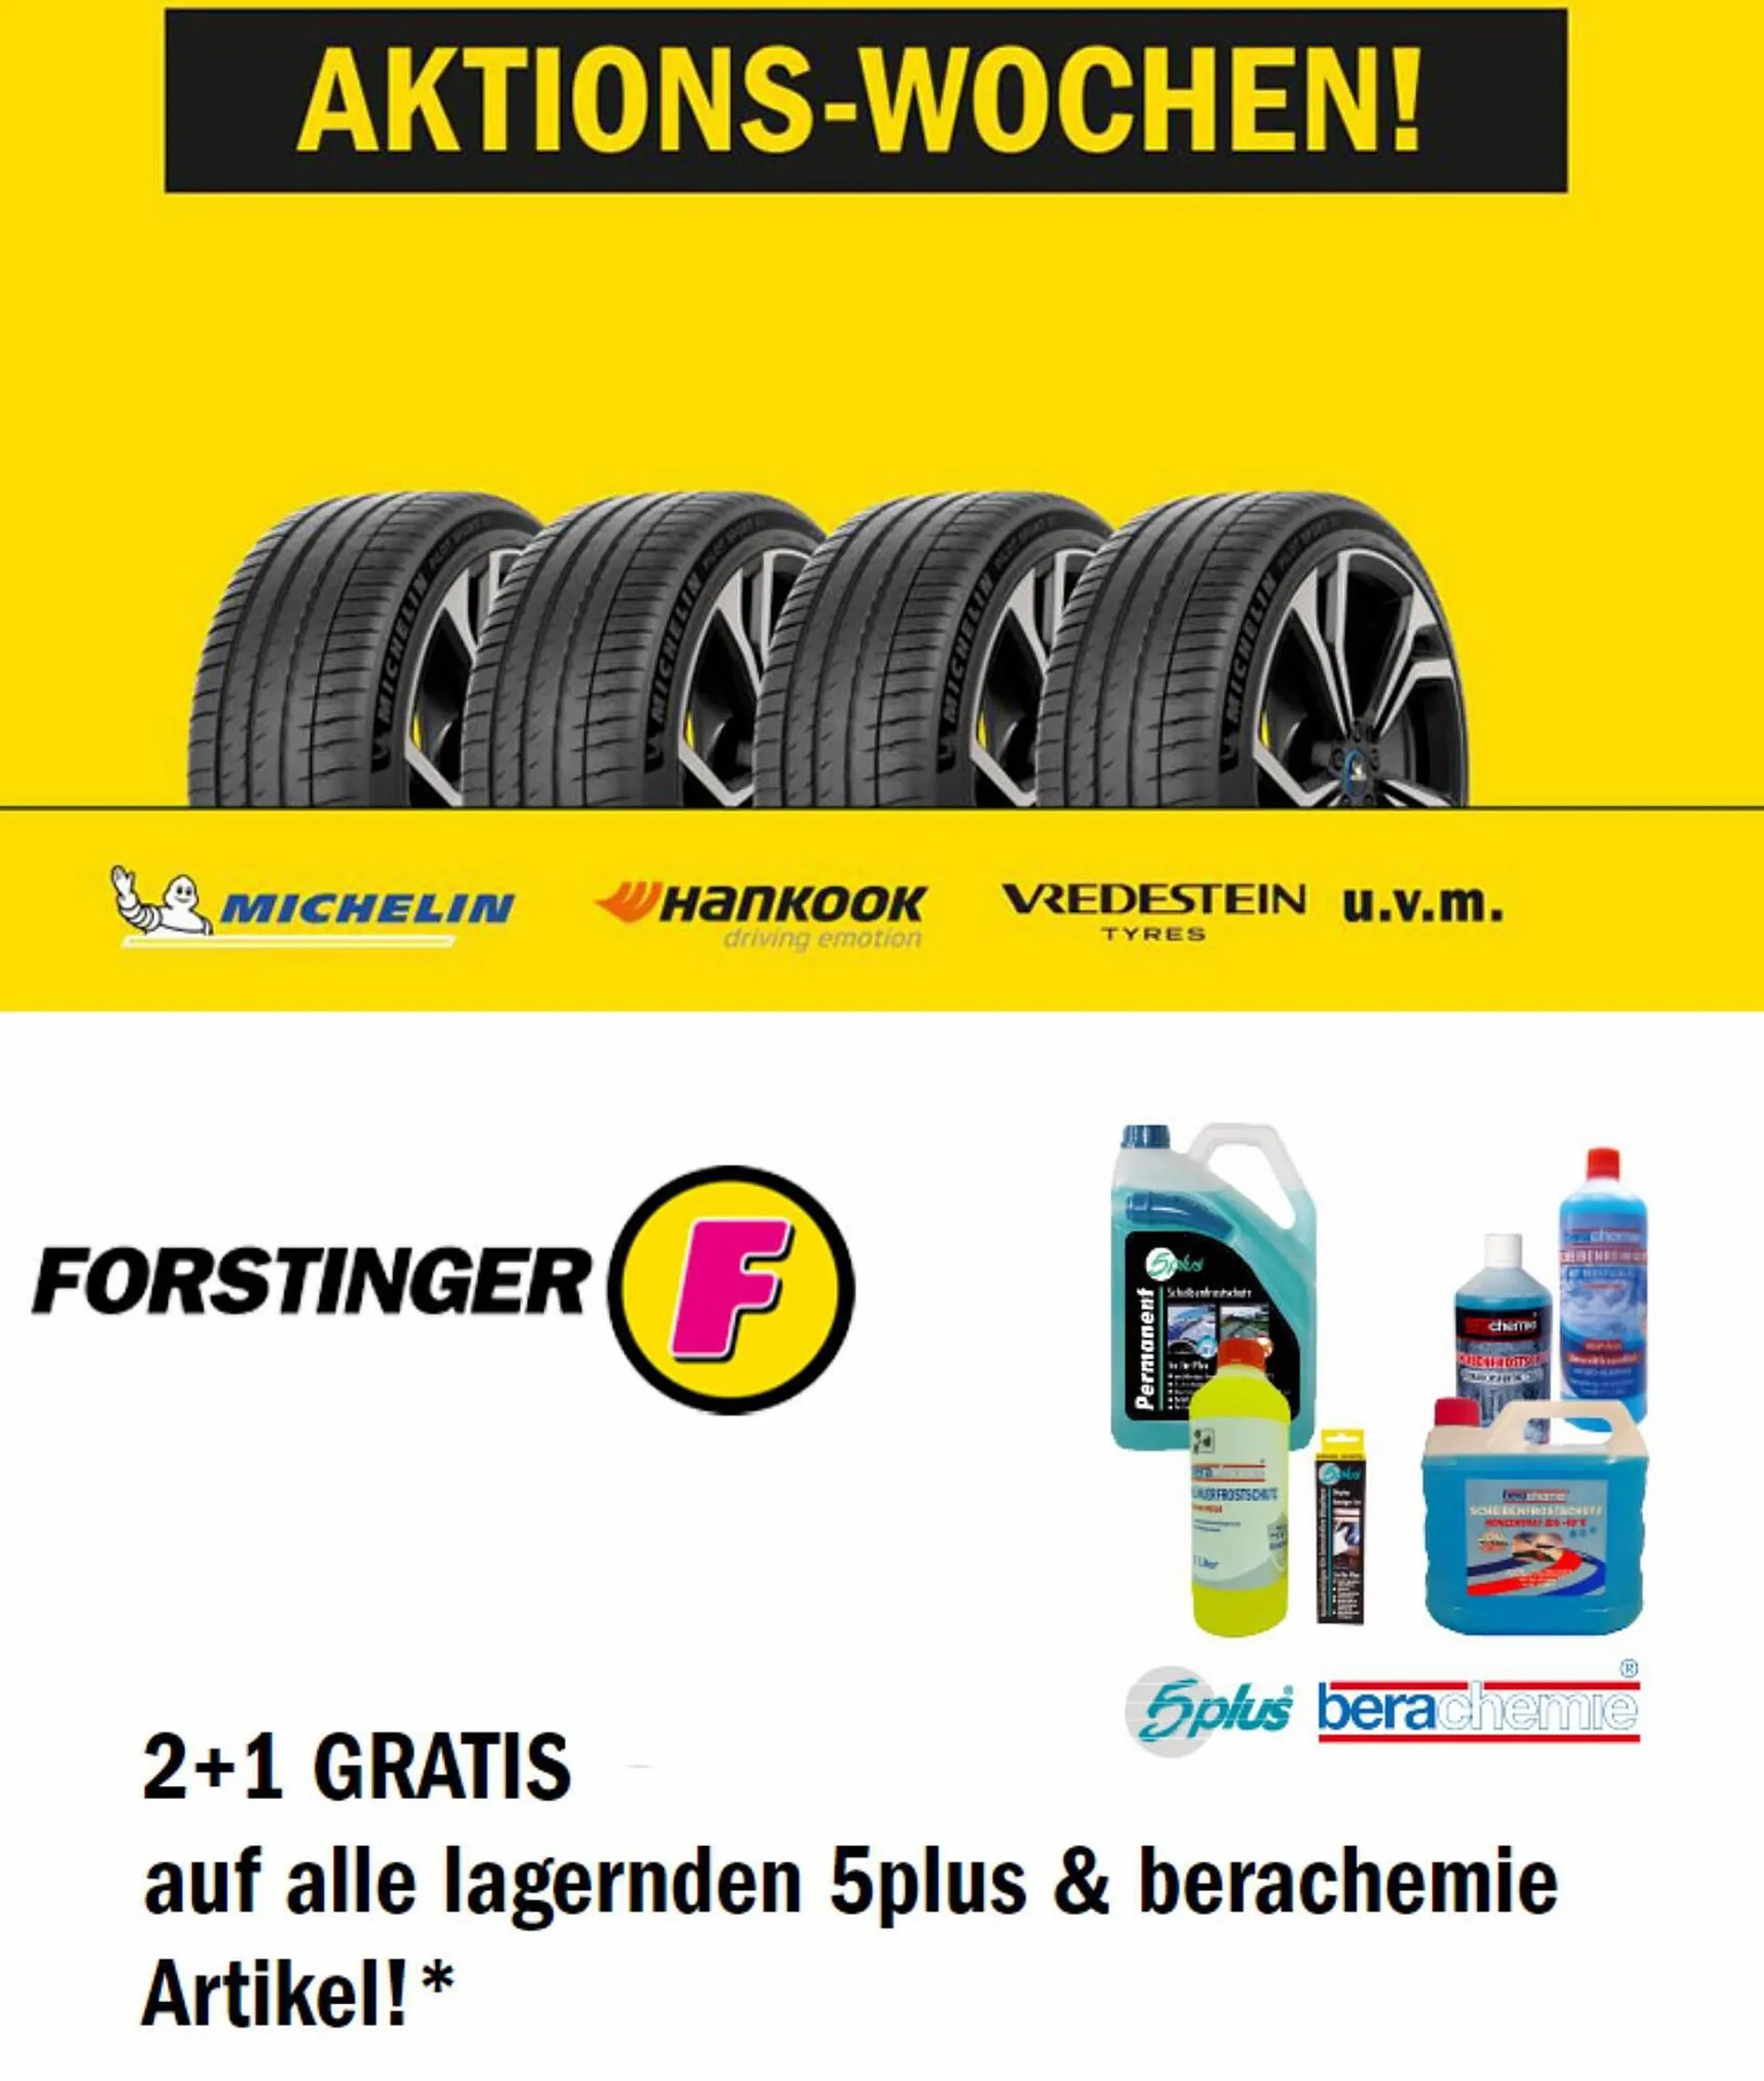 Forstinger Flugblatt - 1